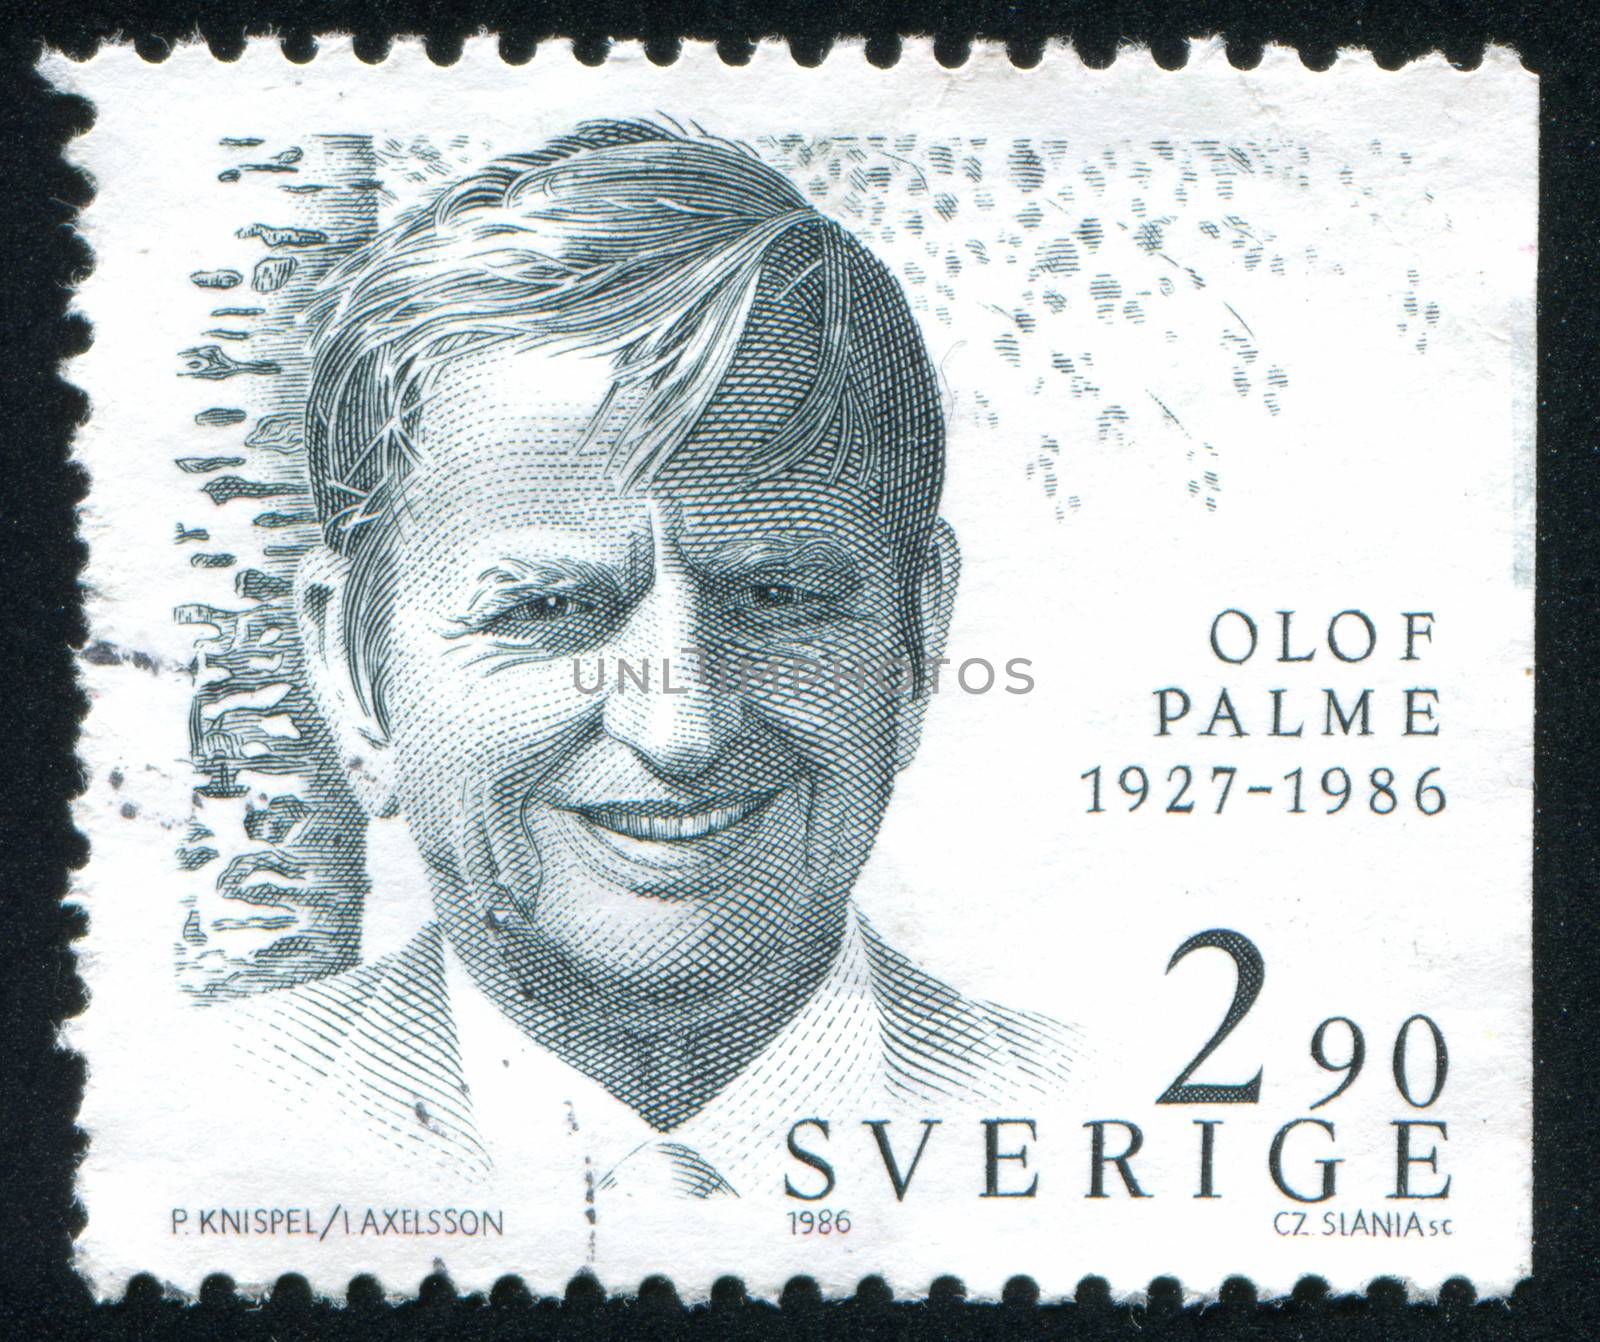 Olof Palme by rook